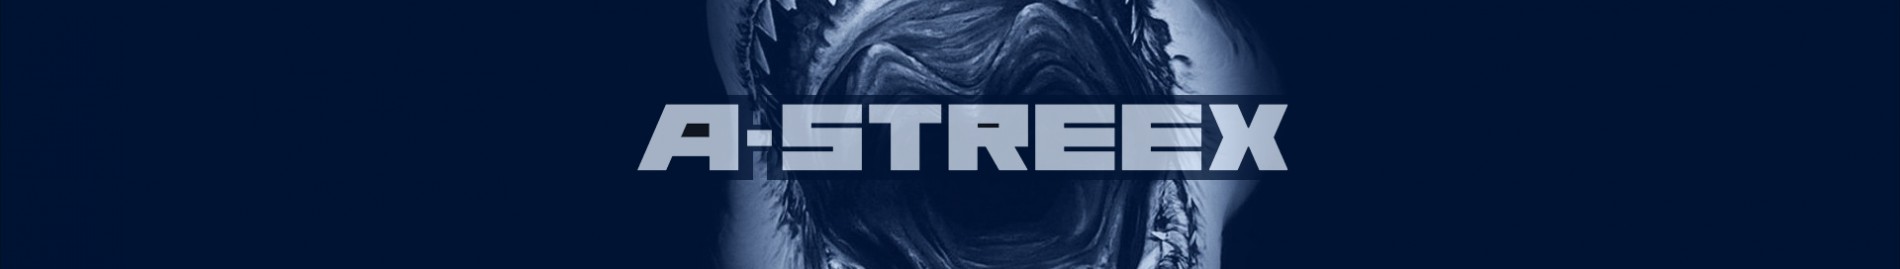 A-STREEX